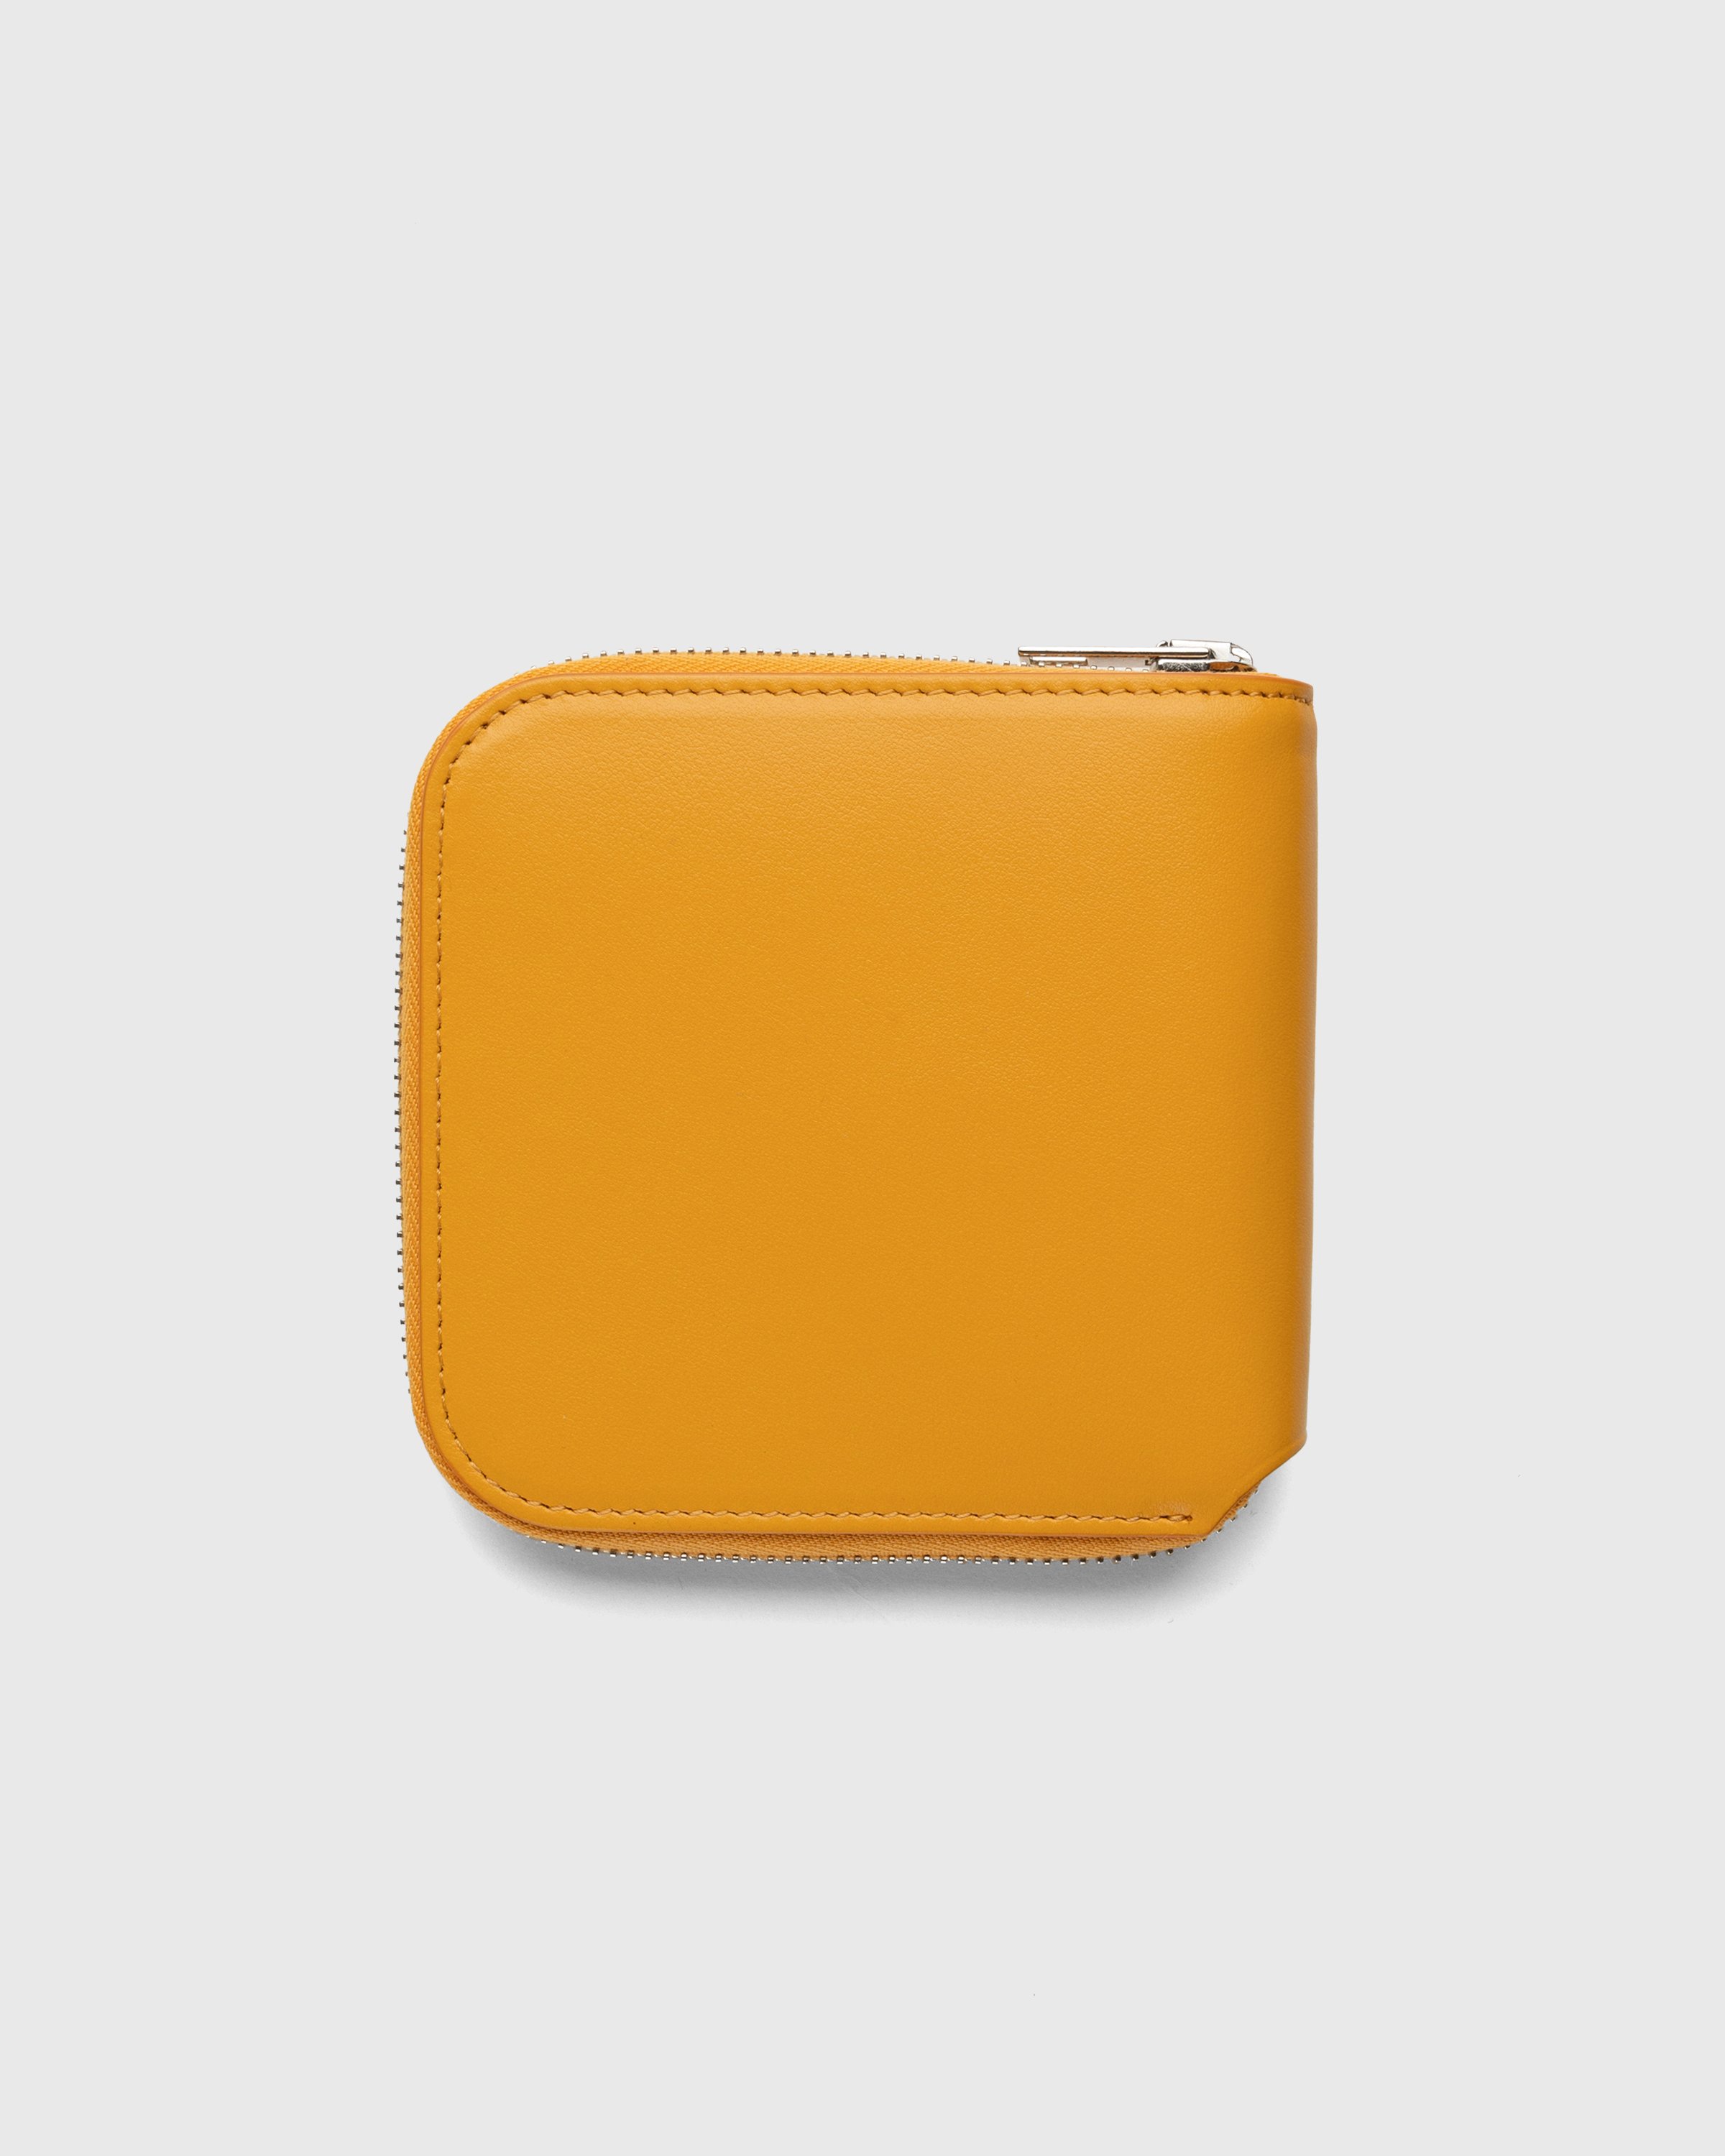 Acne Studios - Leather Zip Wallet Orange - Accessories - Orange - Image 2